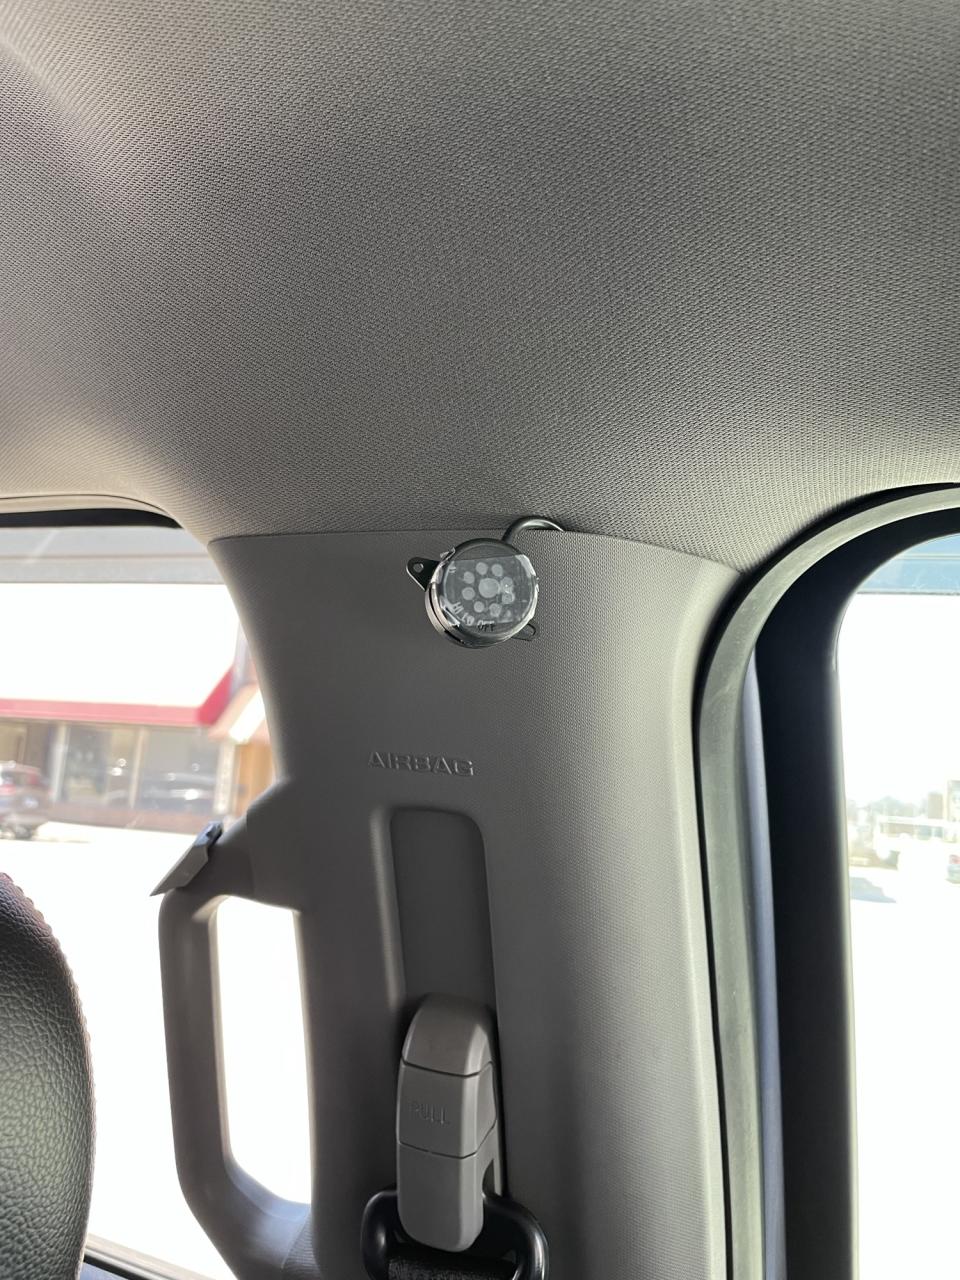 small camera-like object inside a truck